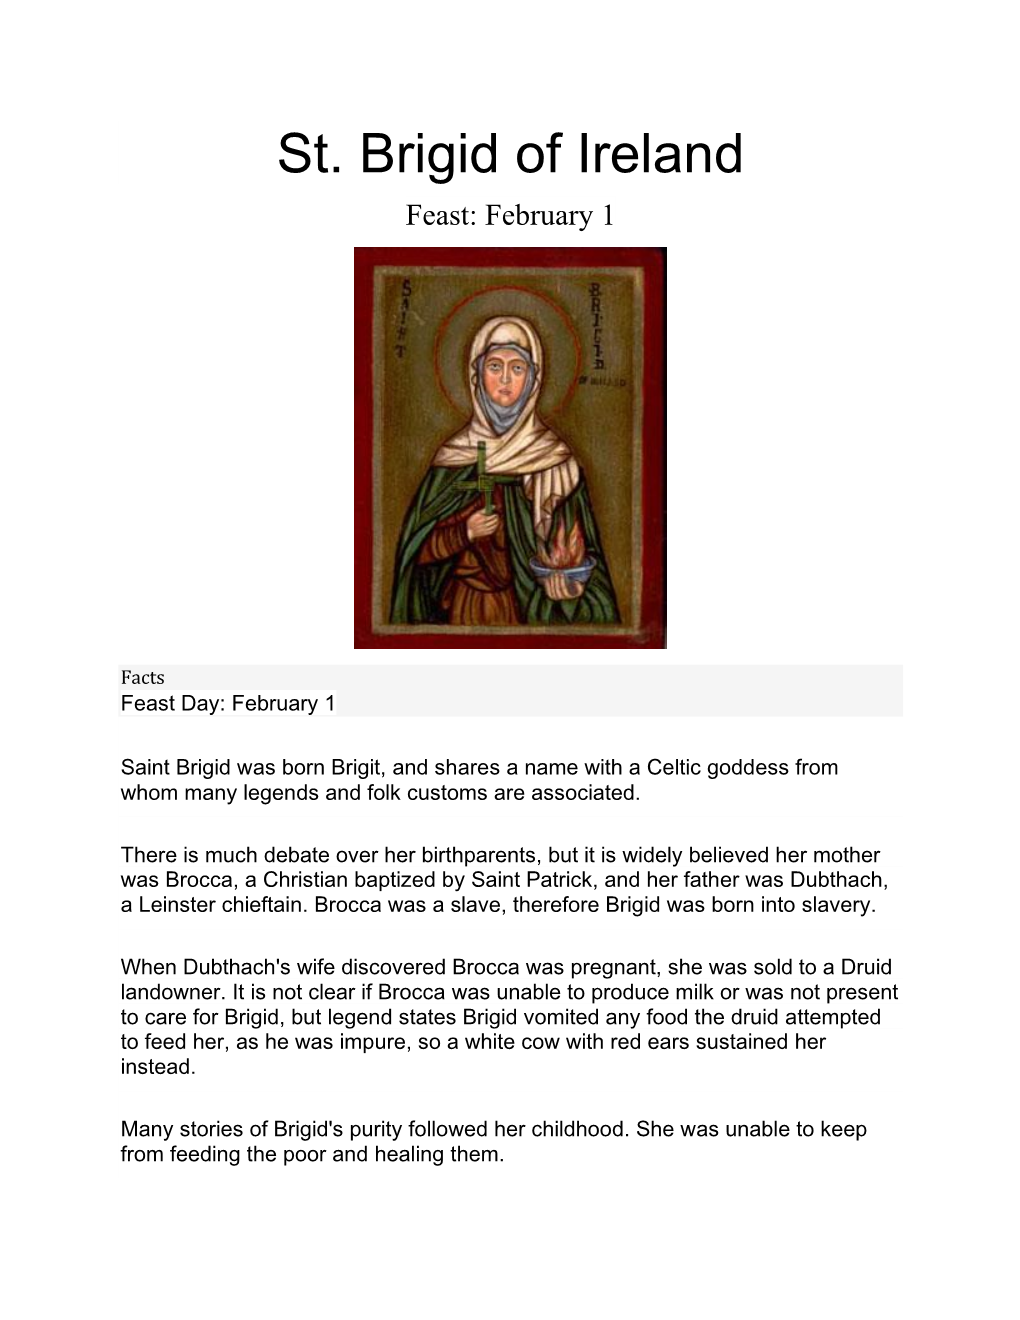 St. Brigid of Ireland Feast: February 1